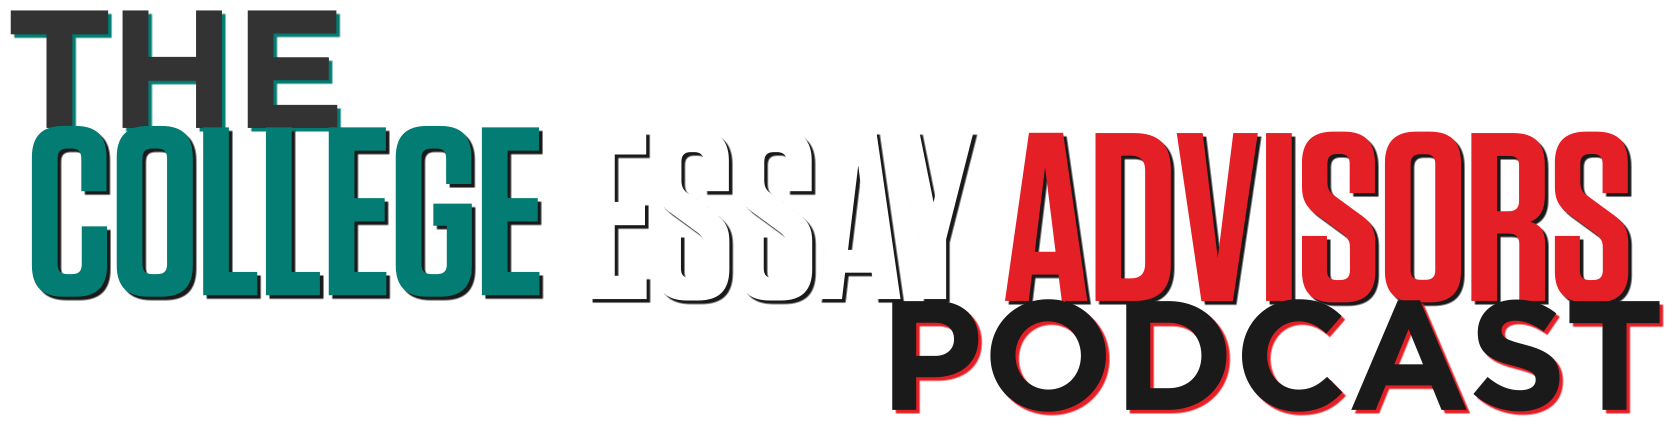 The College Essay Advisors Podcast